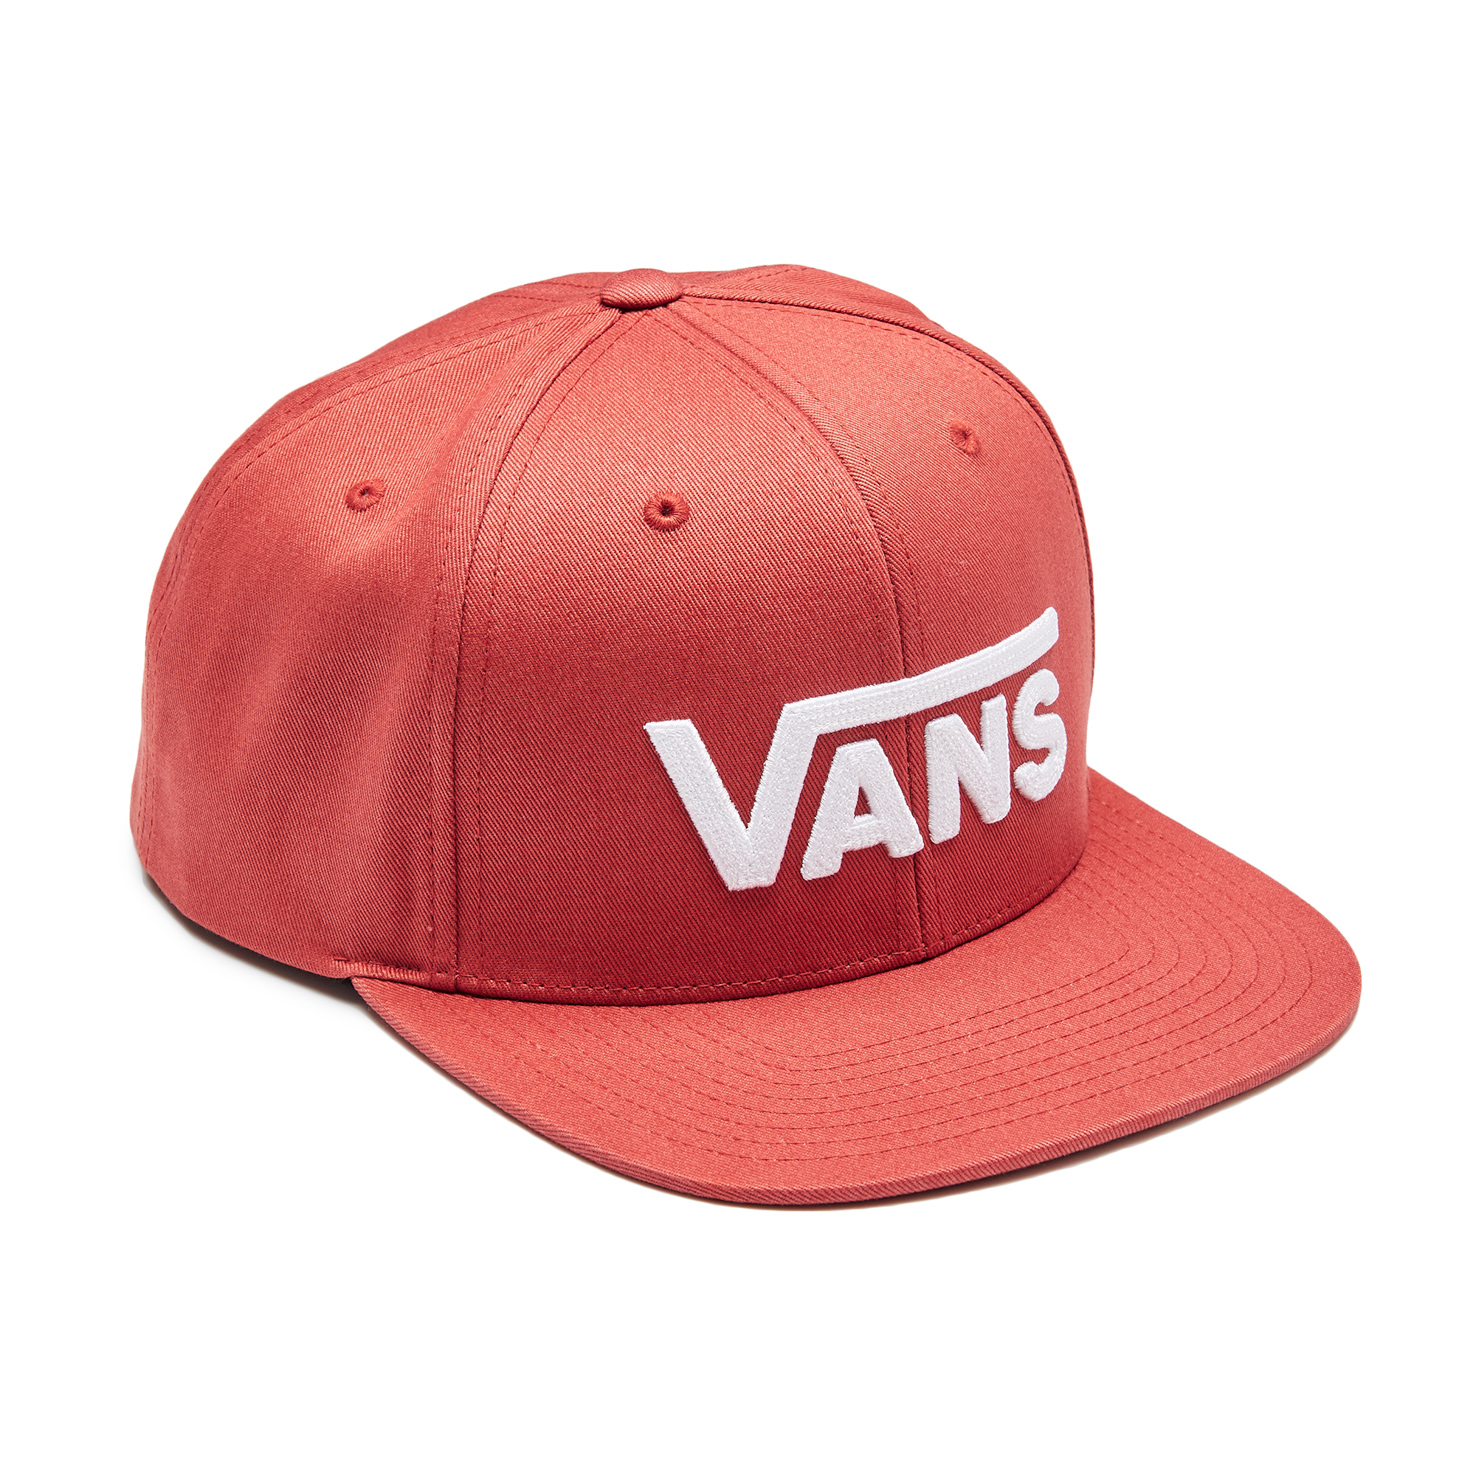 Drop V Snapback II VANS, размер Один размер, цвет красный VNVA36OR - фото 1